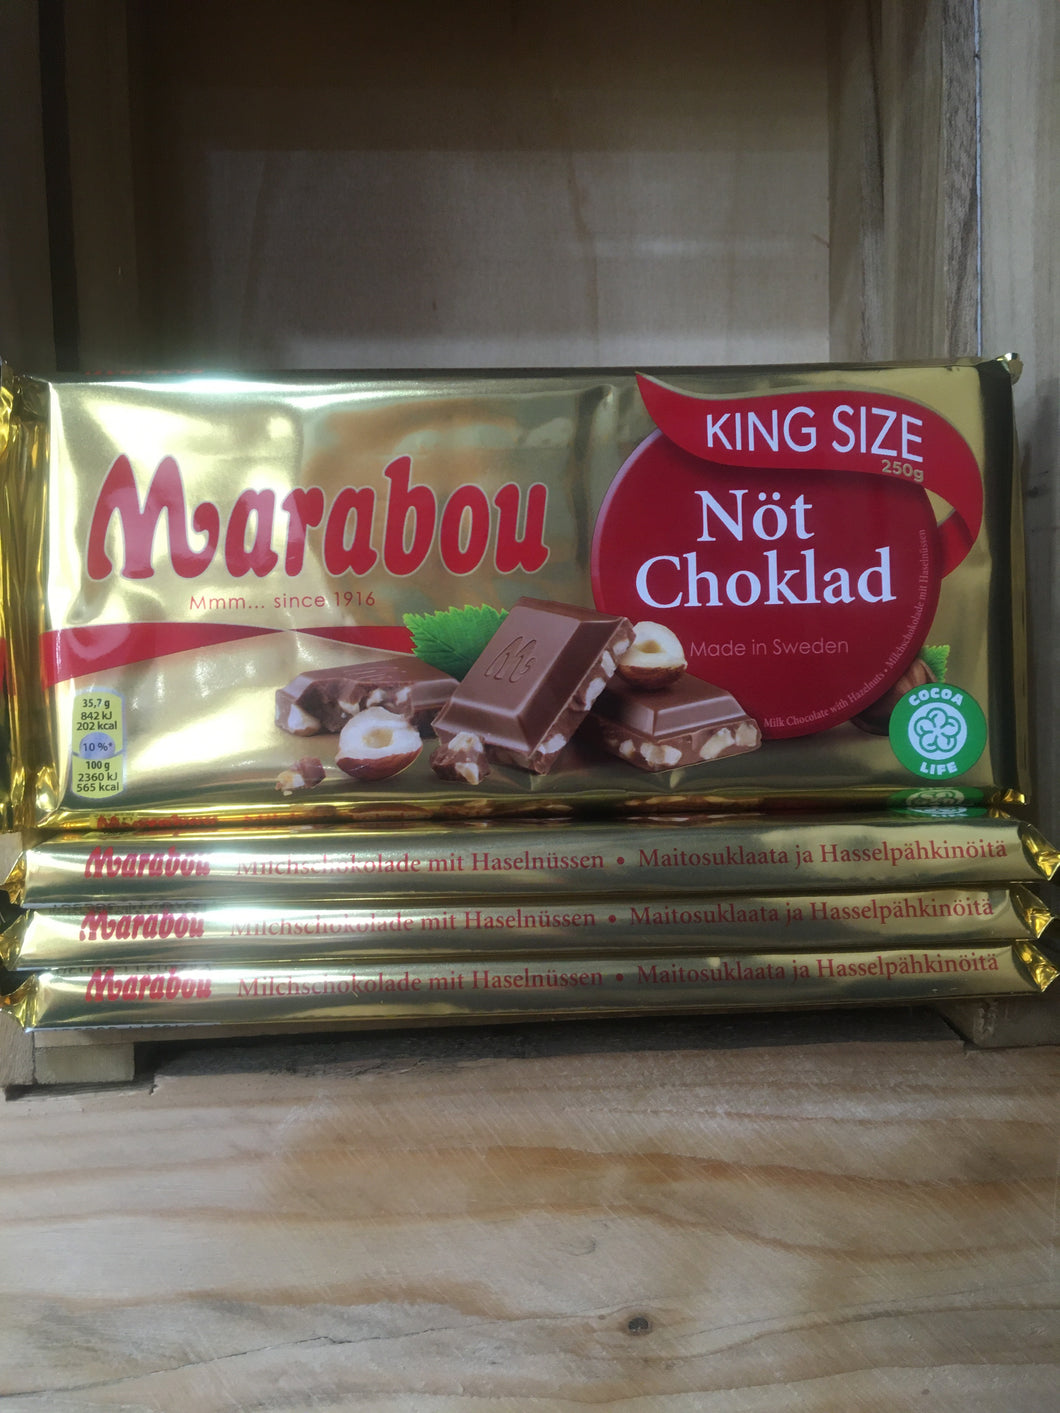 1Kg of Marabou Nut Choklad Swedish Milk Chocolate with Hazelnuts (4 Bars of 250g)